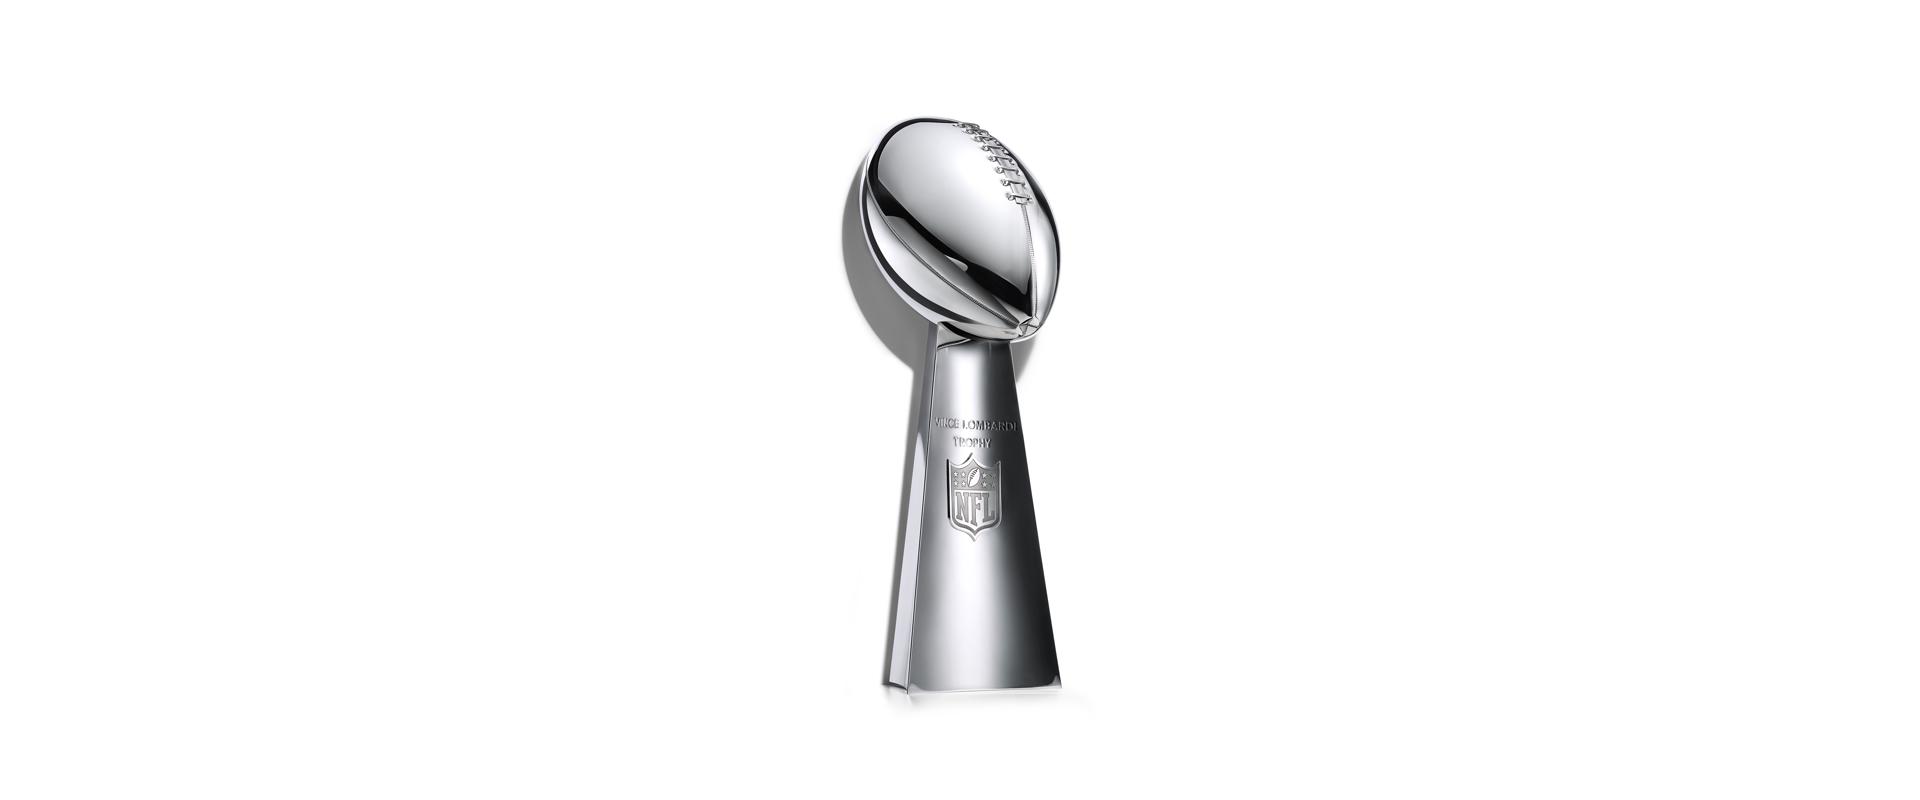 Kansas City Chiefs Ambassadors receiving Super Bowl LVII rings - A to Z  Sports